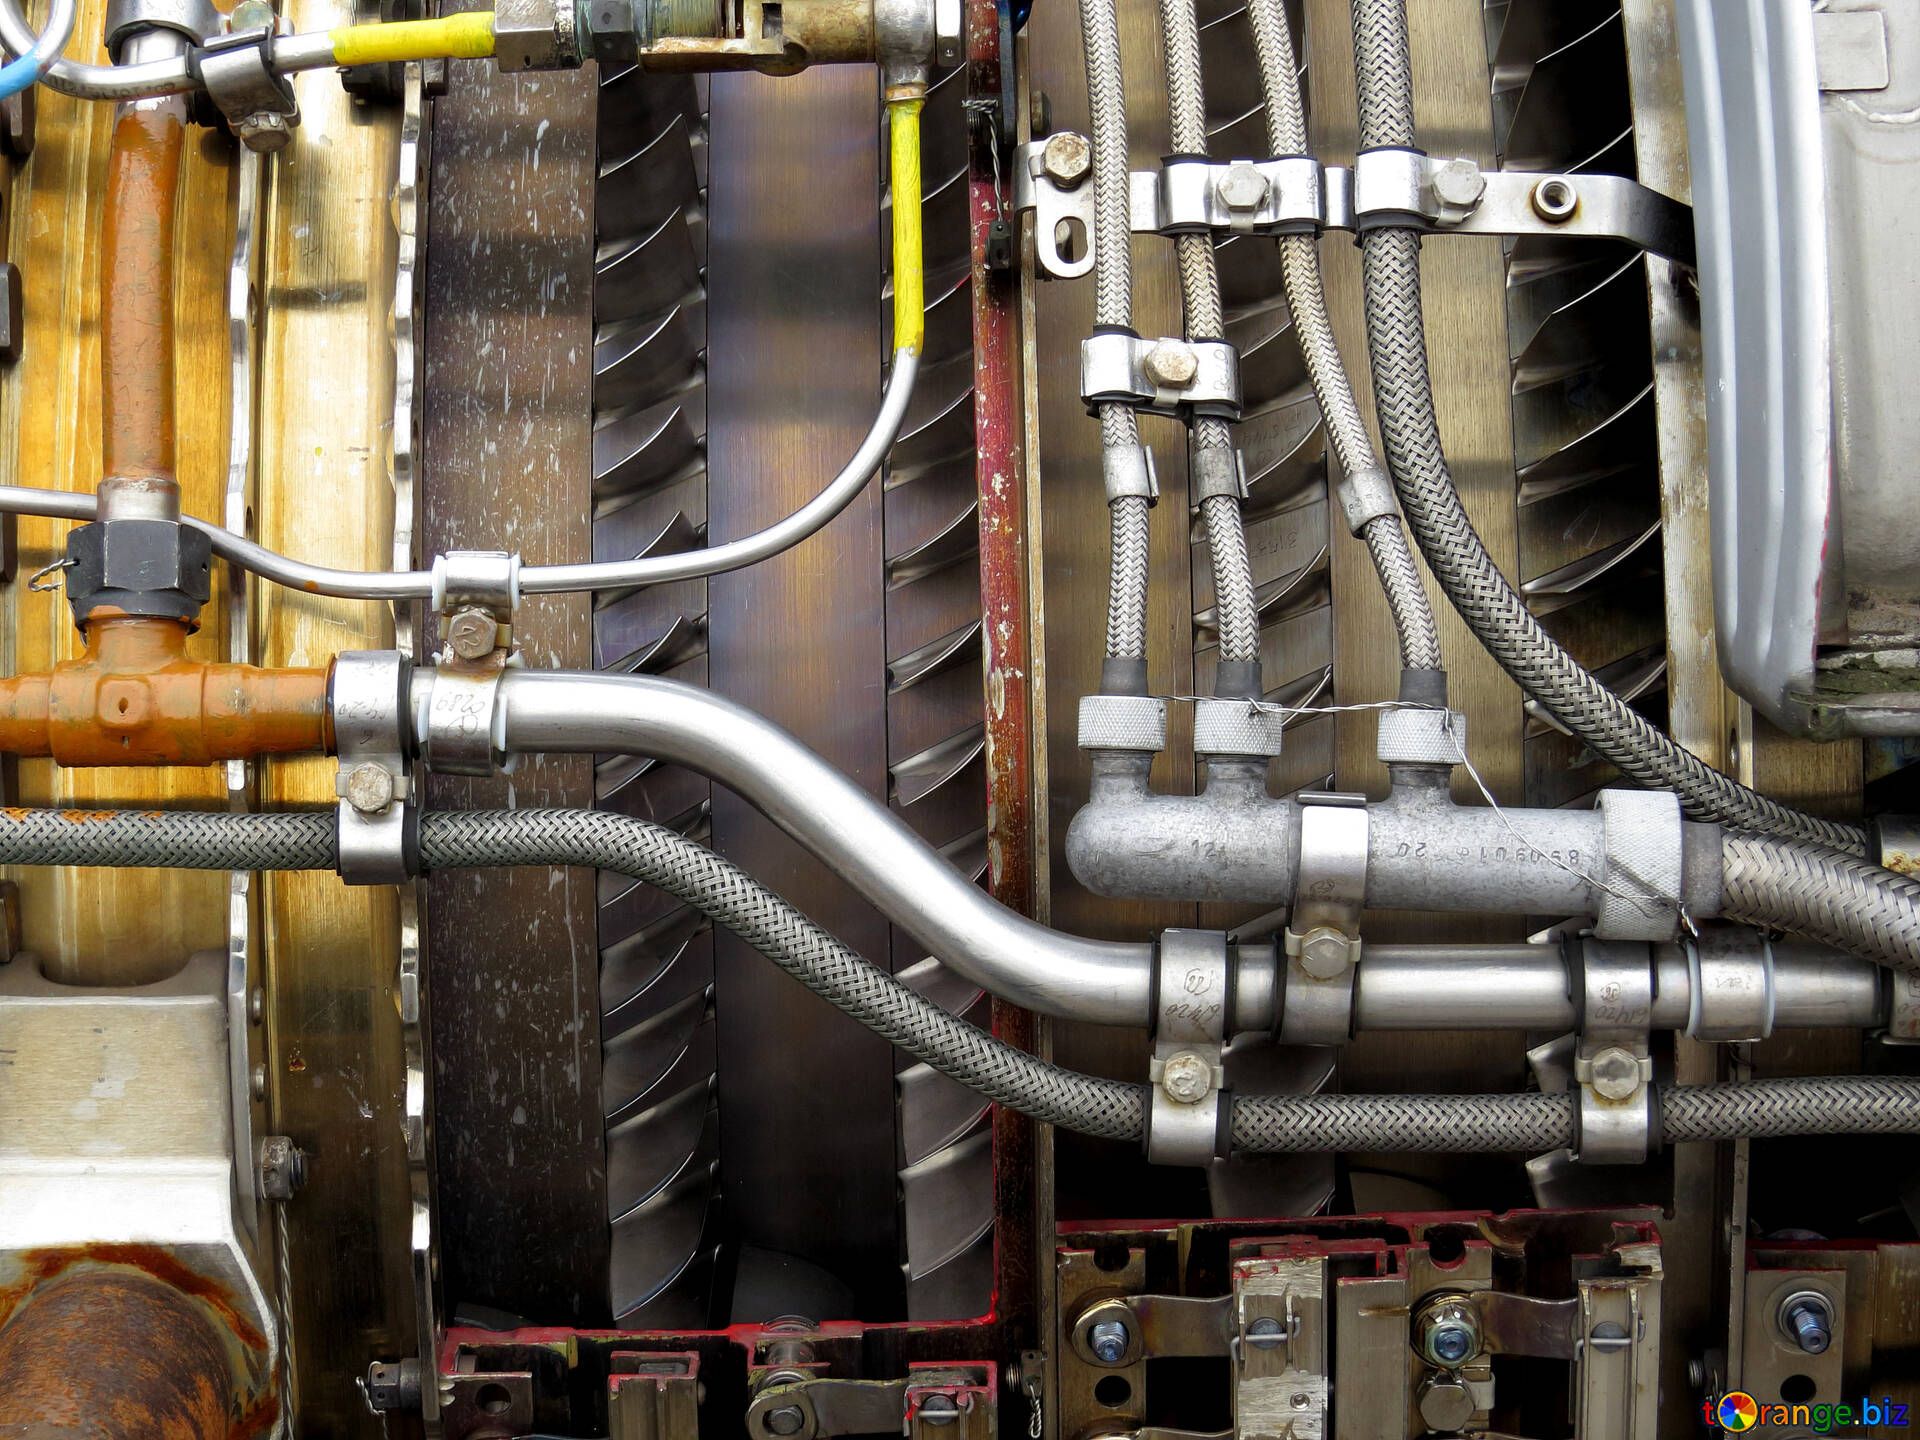 Aircraft engines image complex system .torange.biz